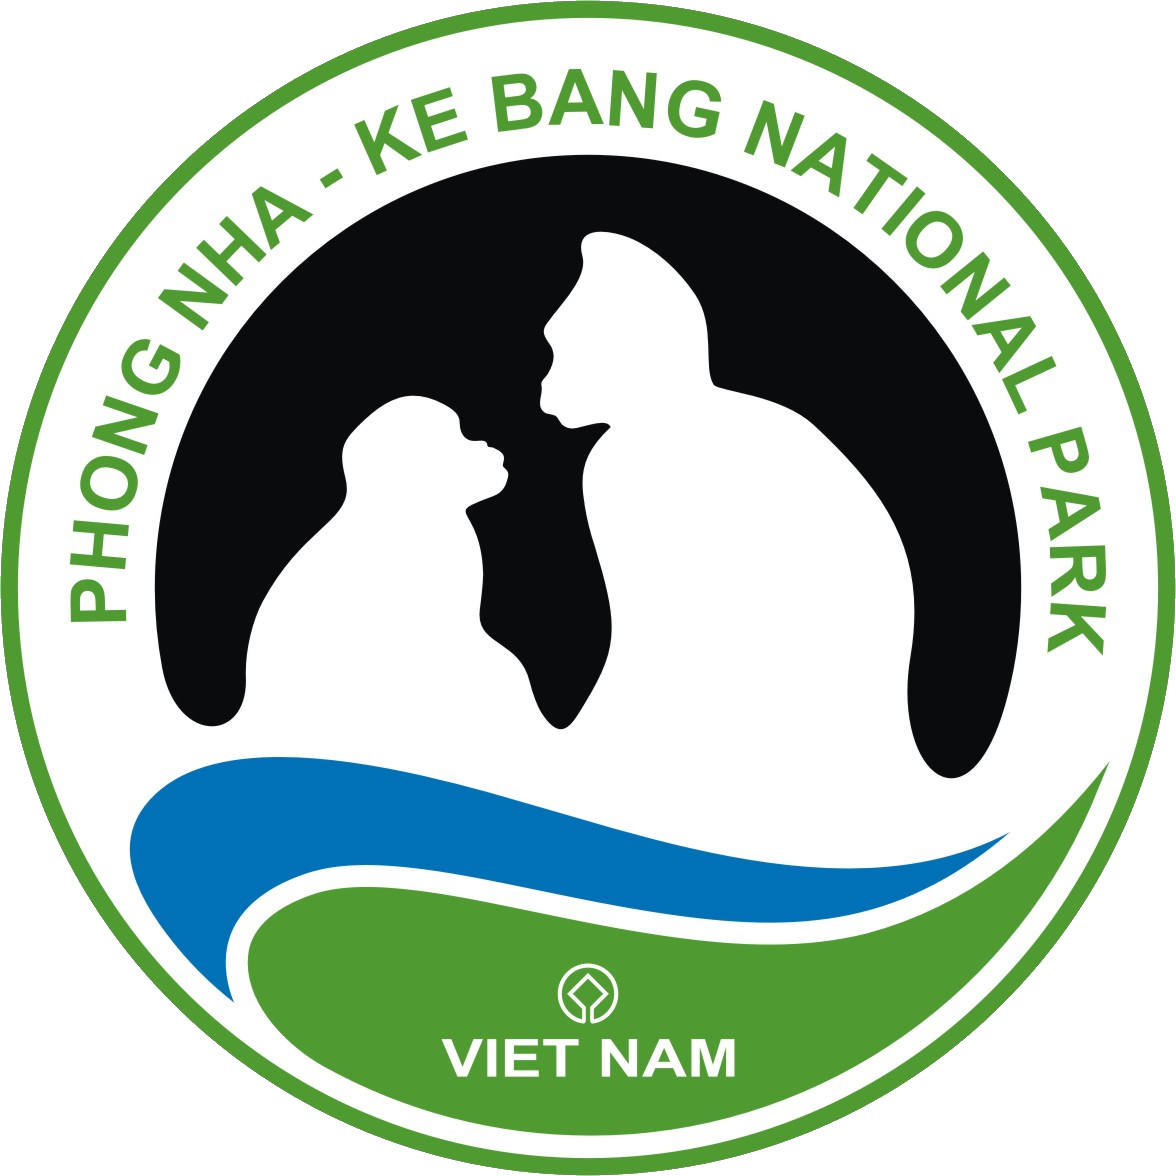 Phongnha - Kebang Tourism Center and Phongnha - Kebang National Park